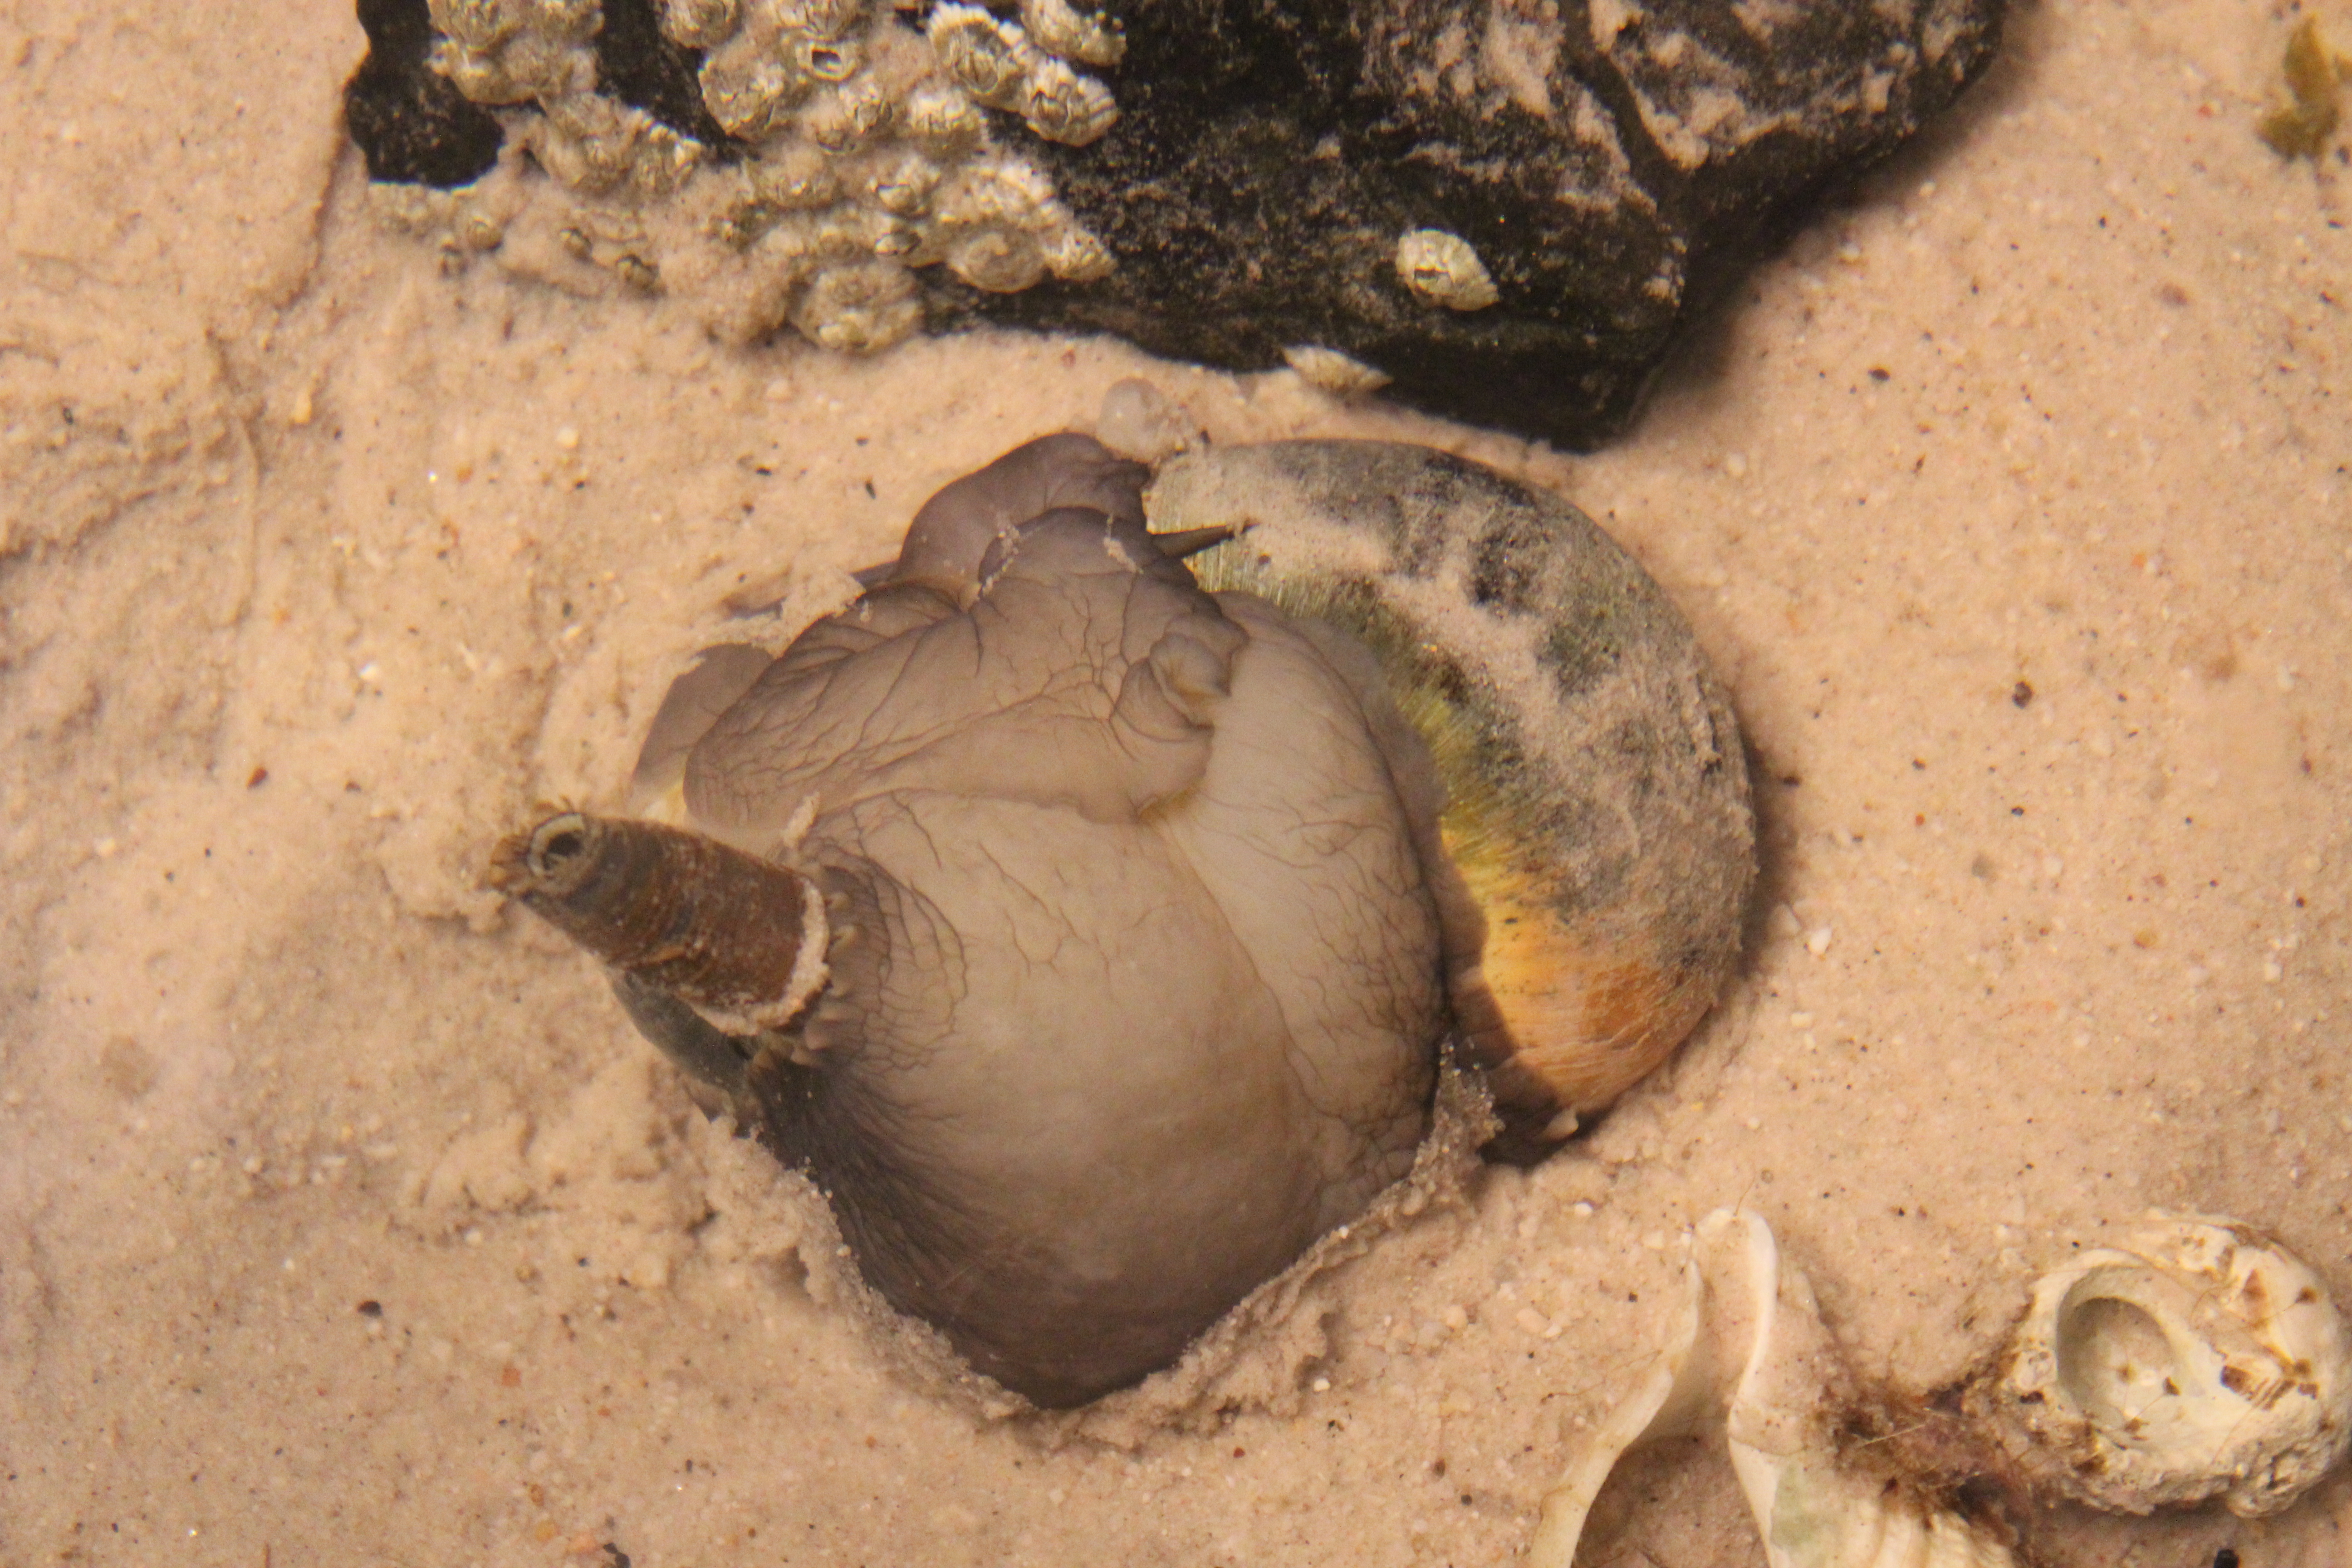 Northern moon snail, feeding on a bivalve